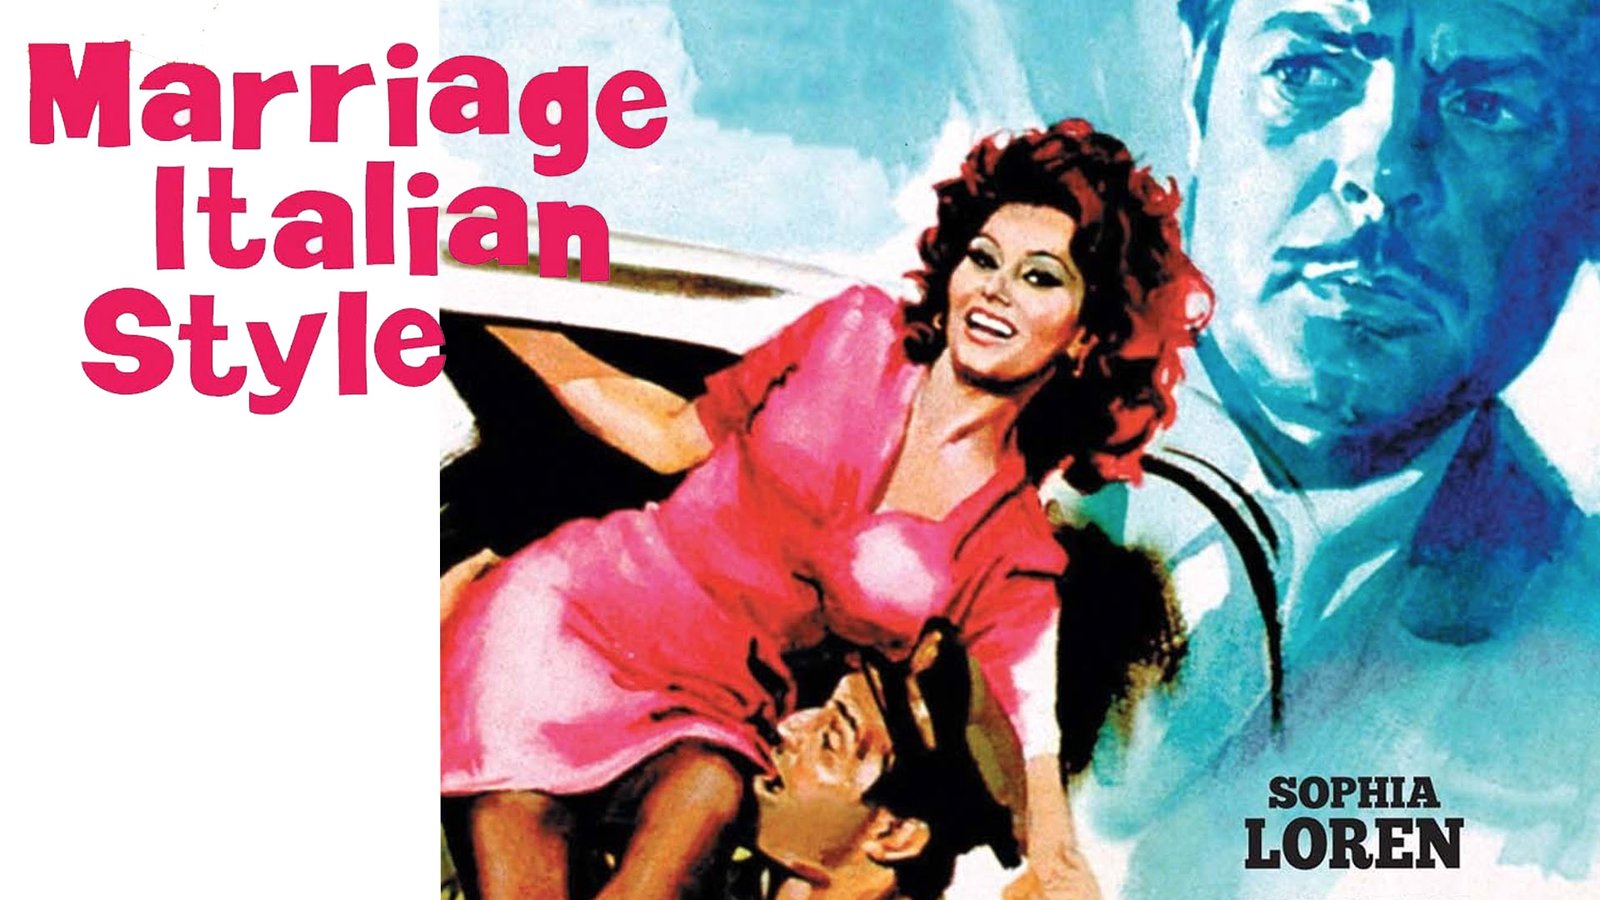 Marriage Italian Style - Matrimonio all'italiana